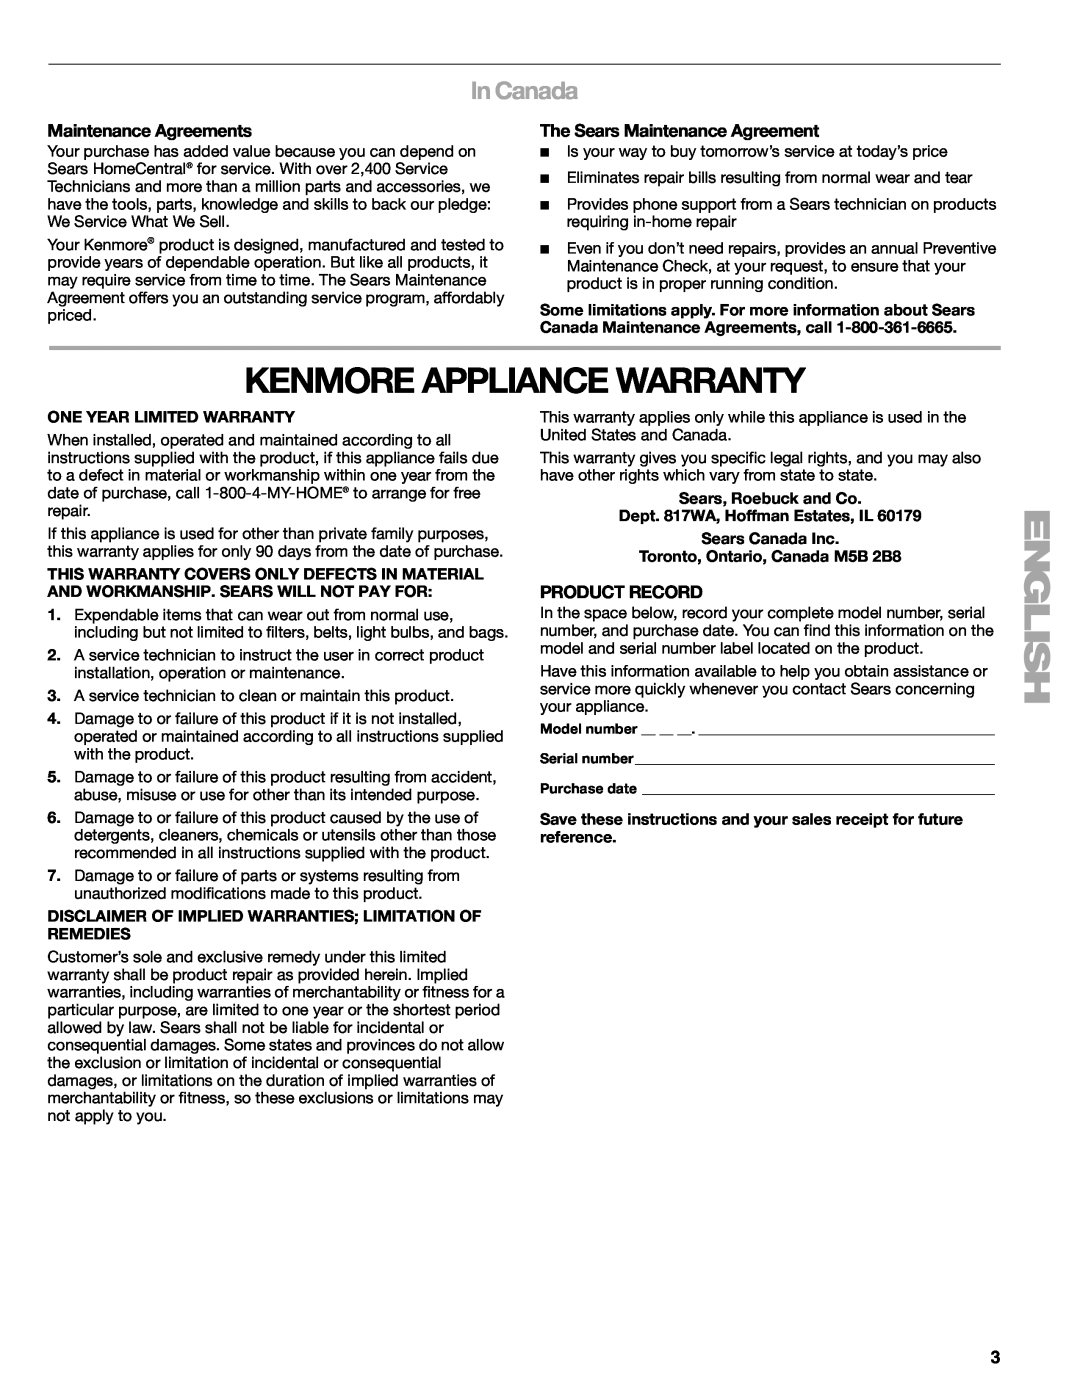 Kenmore 665.1771 manual Kenmore Appliance Warranty, In Canada, Maintenance Agreements, The Sears Maintenance Agreement 